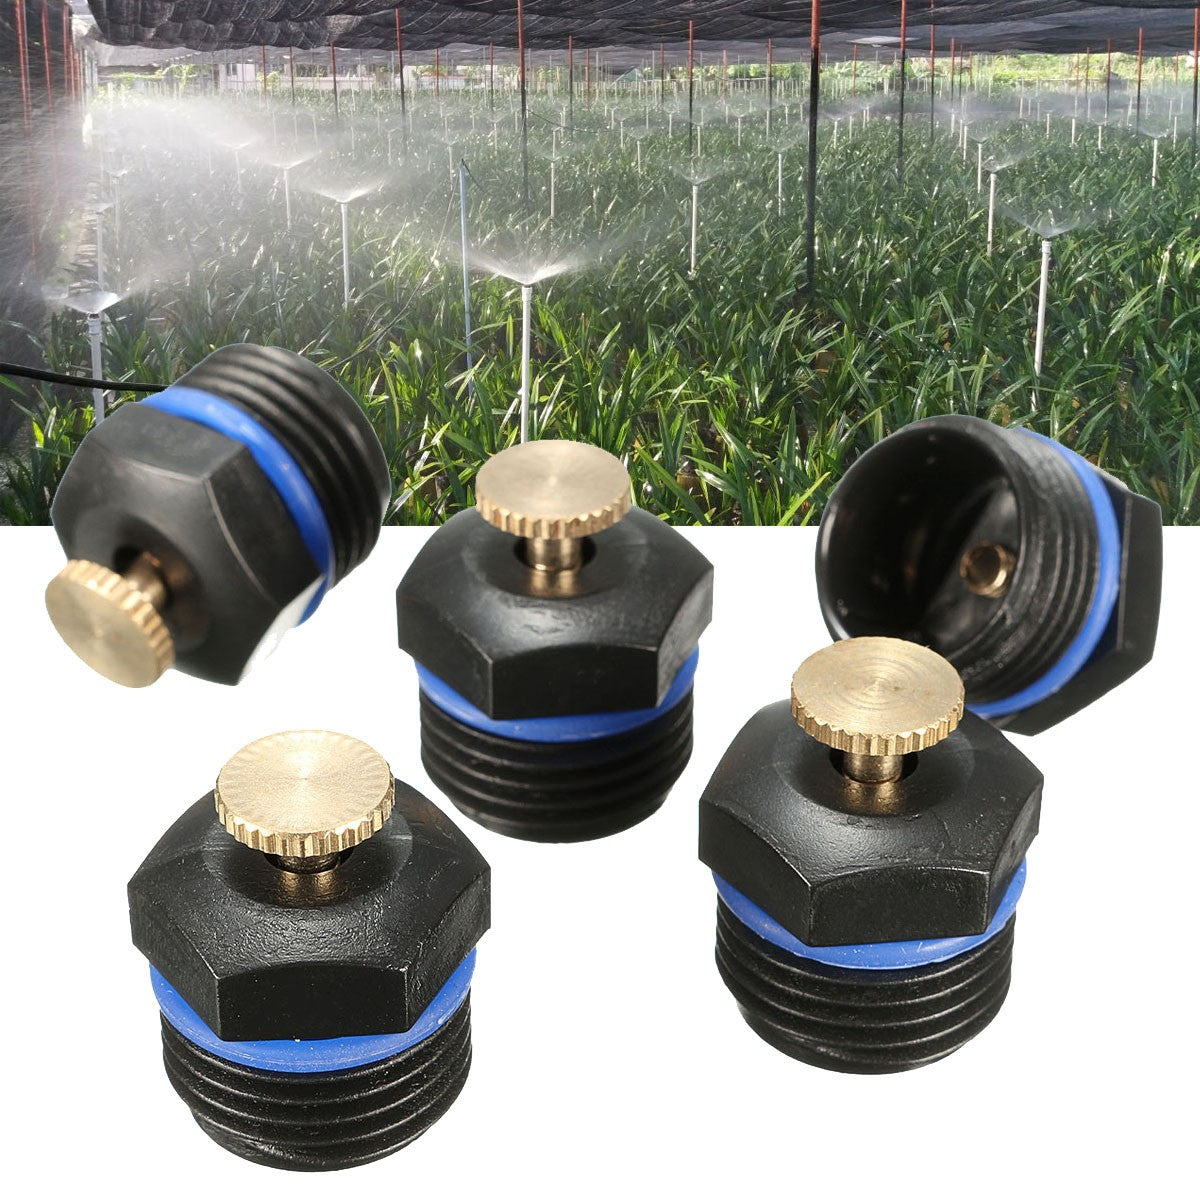 5Pcs Garden Sprinkler Head Water Lawn Sprinkle Irrigation Spray System Plant Flower Cooling